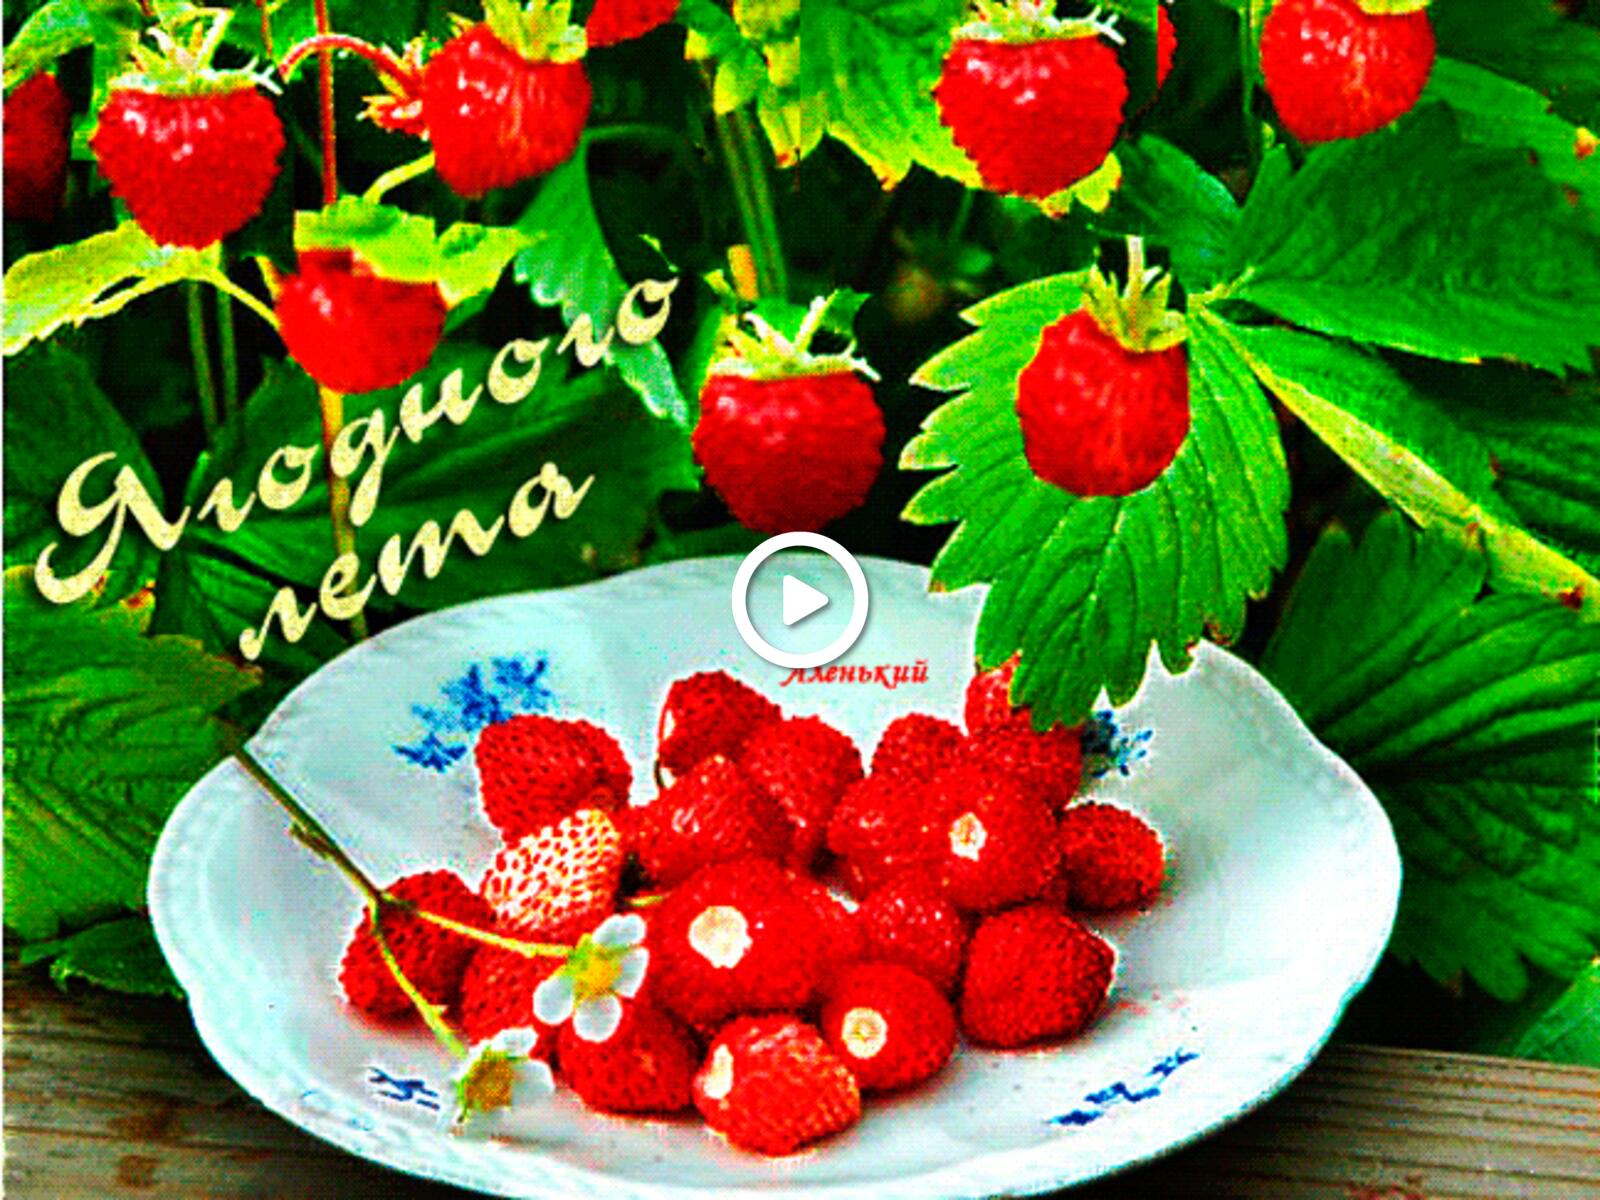 Shrub with fresh strawberries